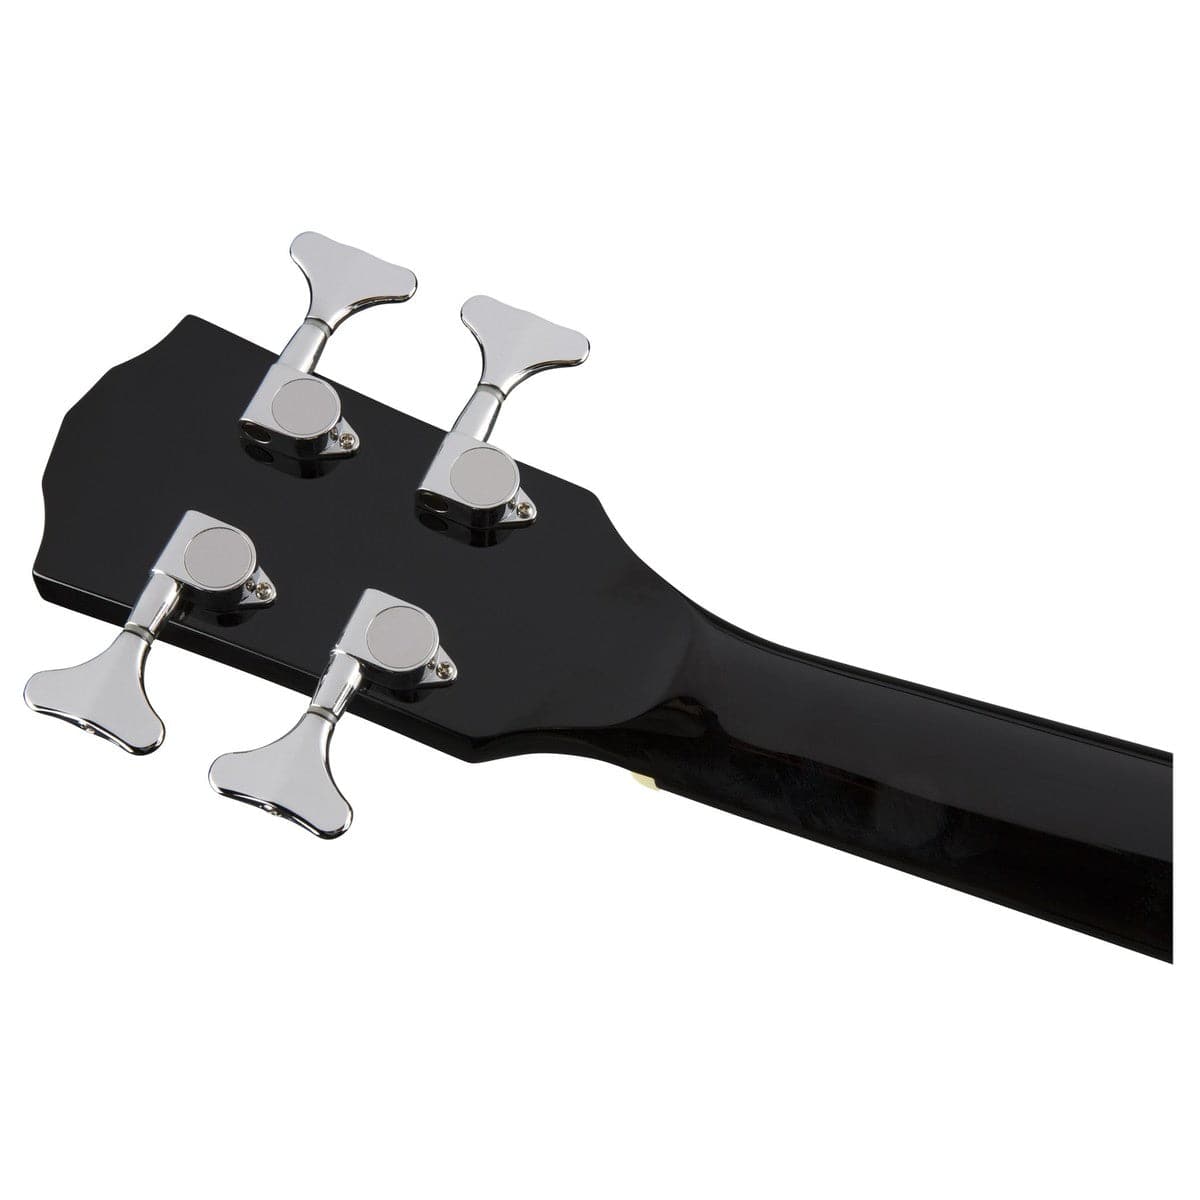 Fender CB-60SCE Electro Acoustic Bass - Black